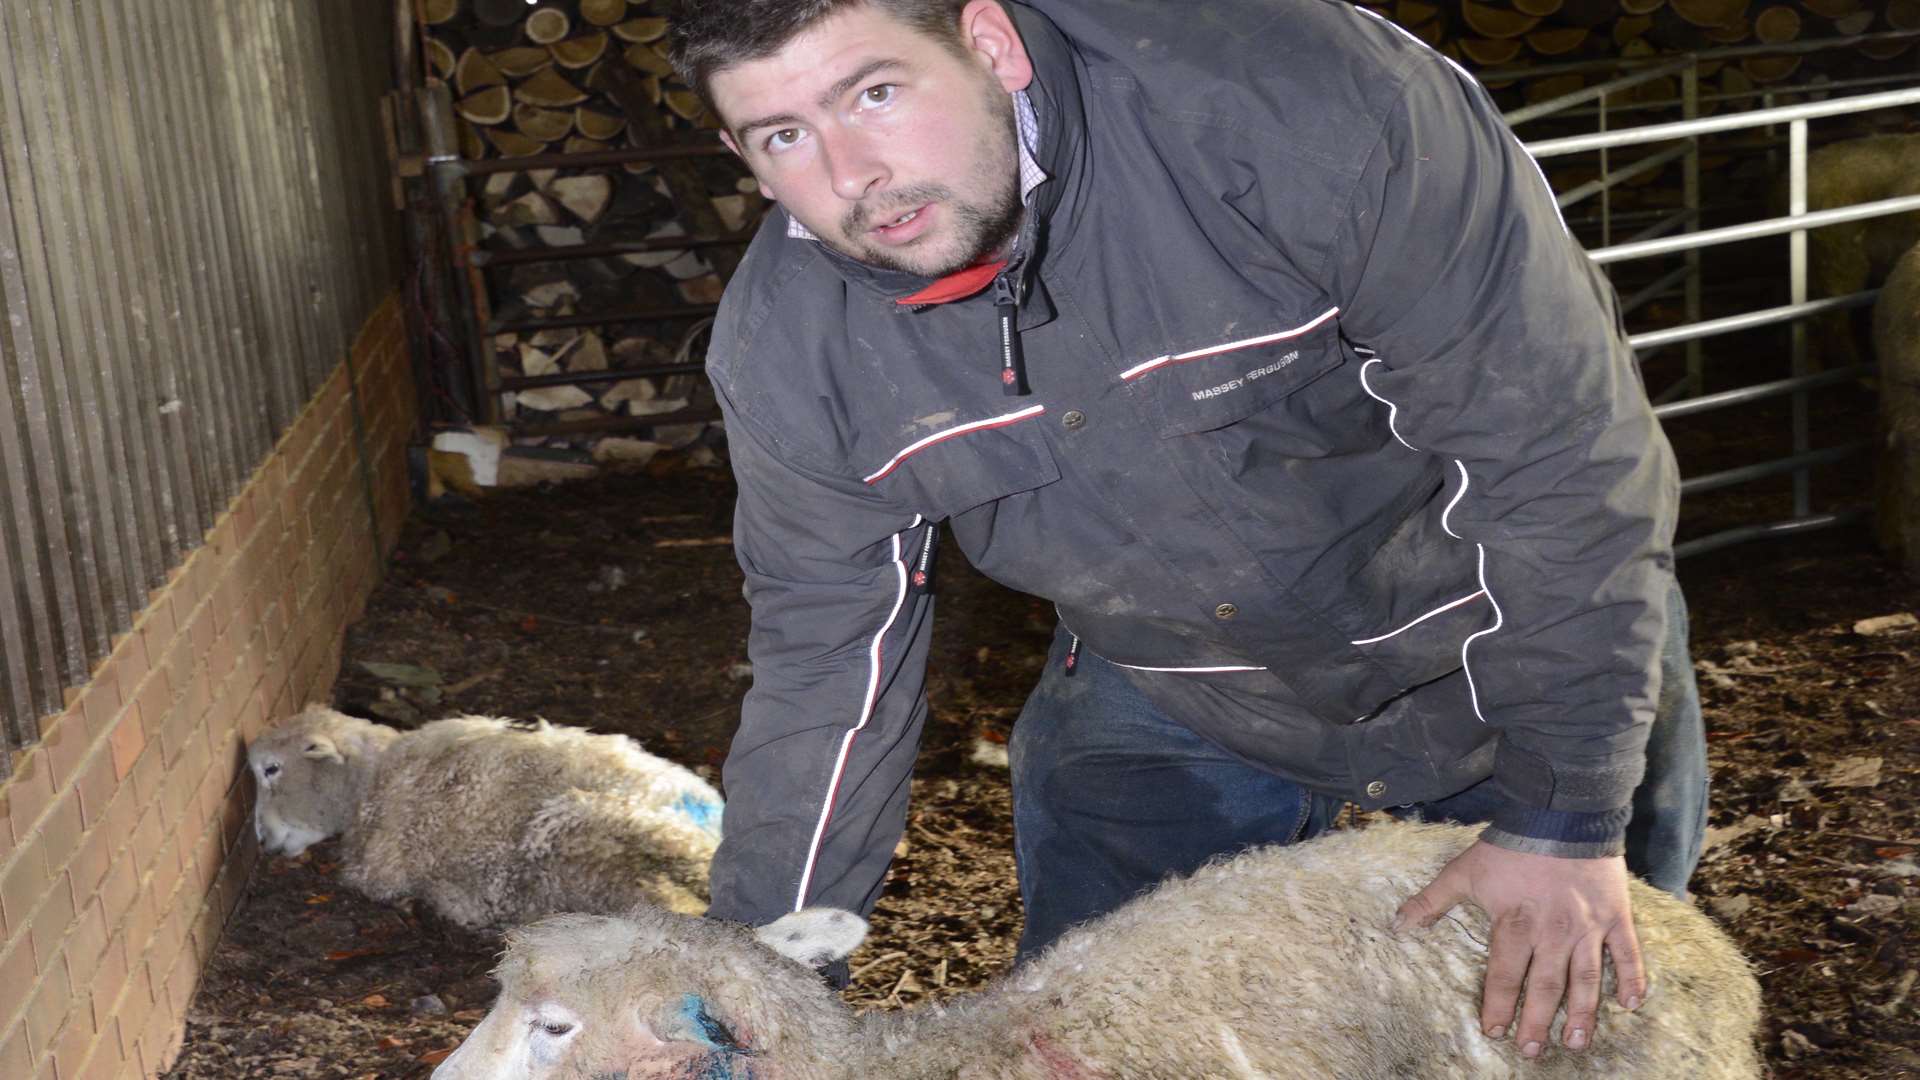 Farmer Alex Pynn tended to a sheep thats ear was chewed